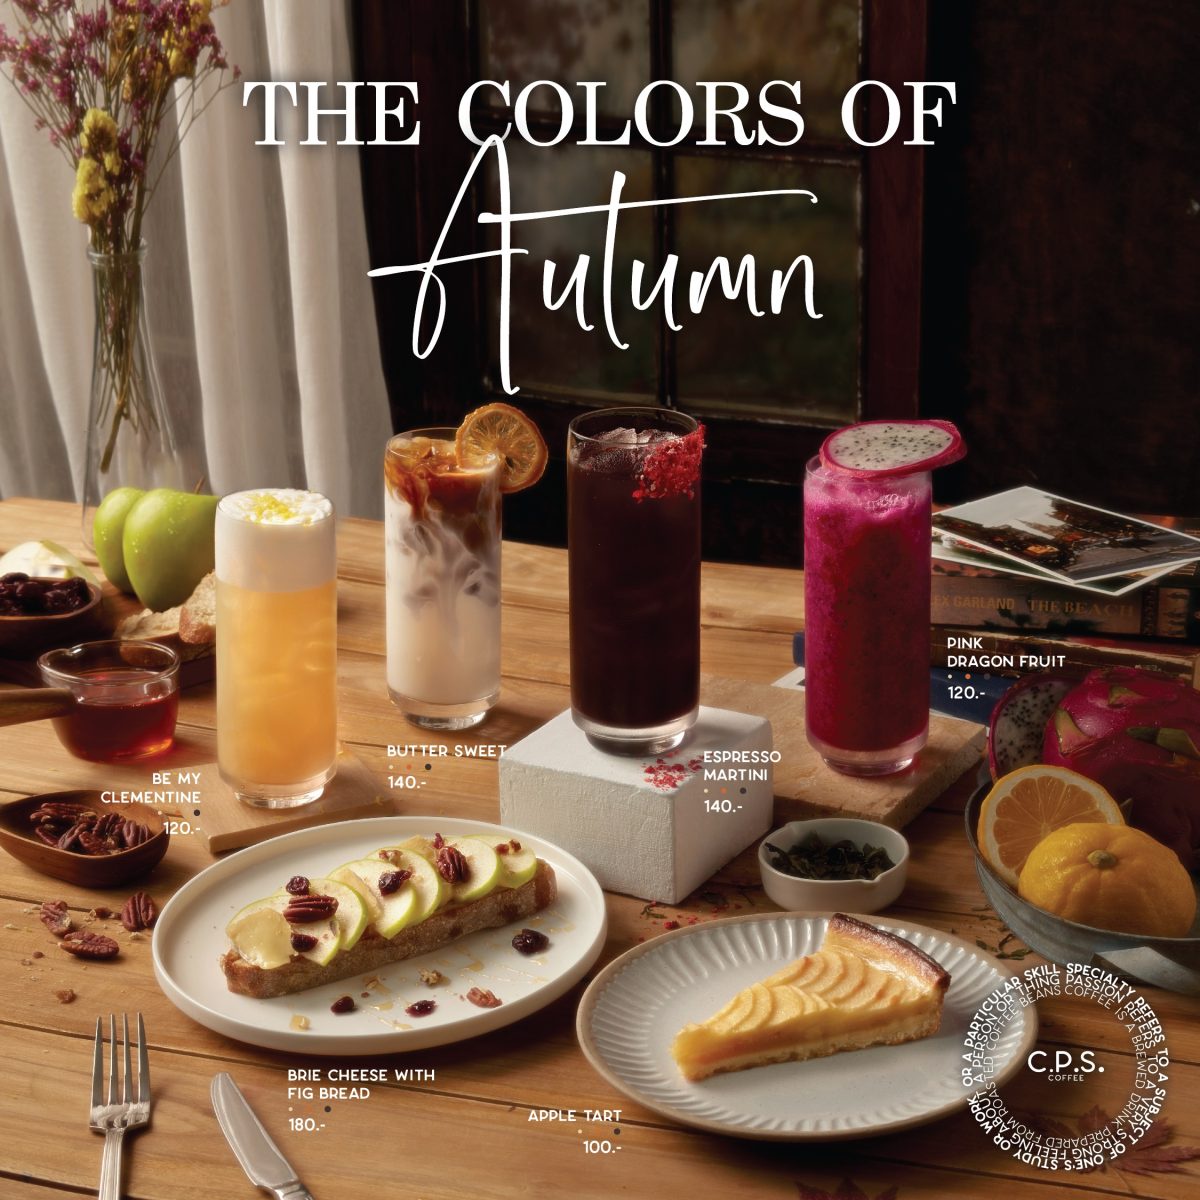 C.P.S. COFFEE รังสรรค์เมนูต้อนรับฤดูใบไม้ร่วง กับคอนเซ็ปต์ The Colors Of Autumn ที่ได้แรงบันดาลใจจากสีสันของฤดูกาล